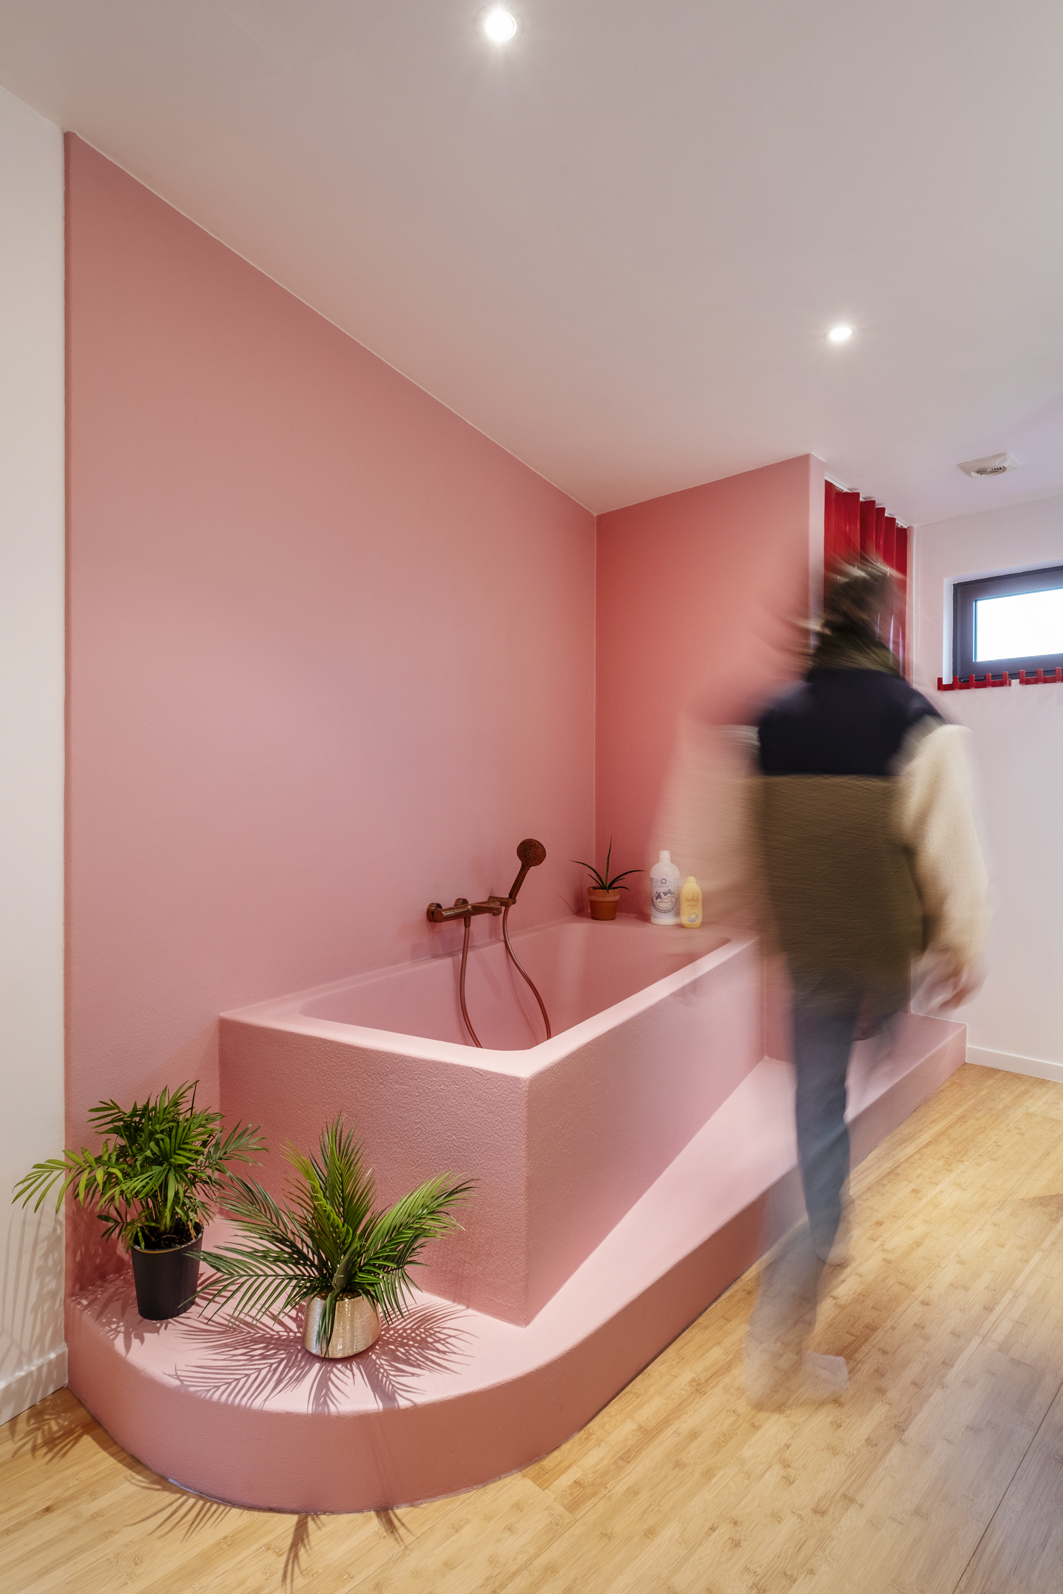 Custom badkamer in polyester voor Pieter-Jan & Sien interior, furniture & events